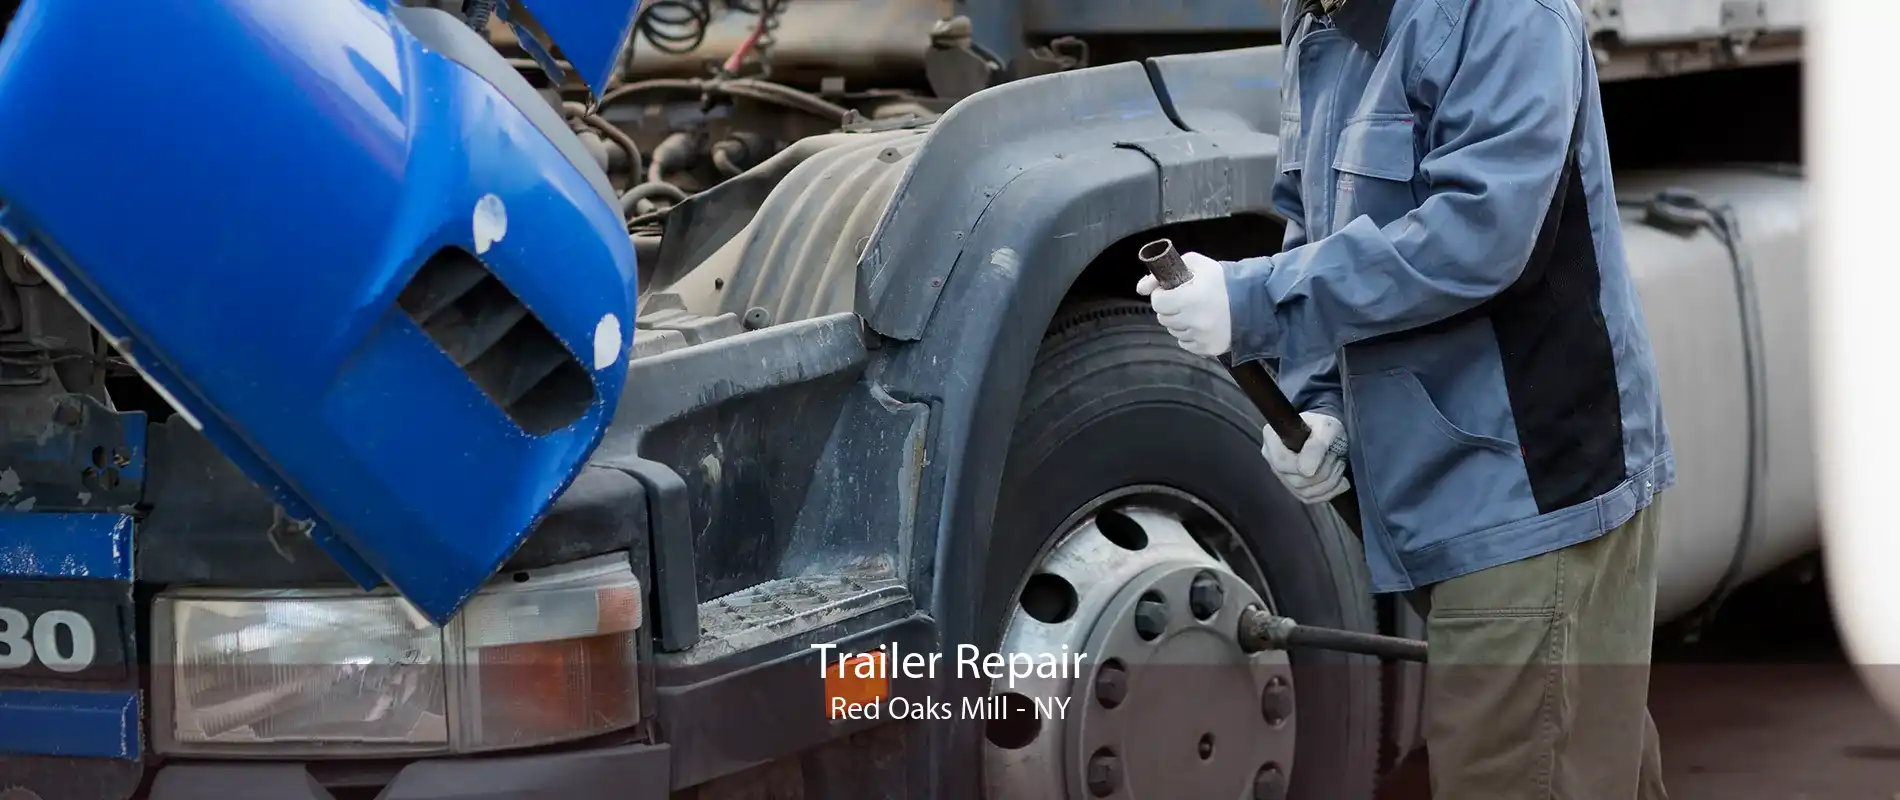 Trailer Repair Red Oaks Mill - NY